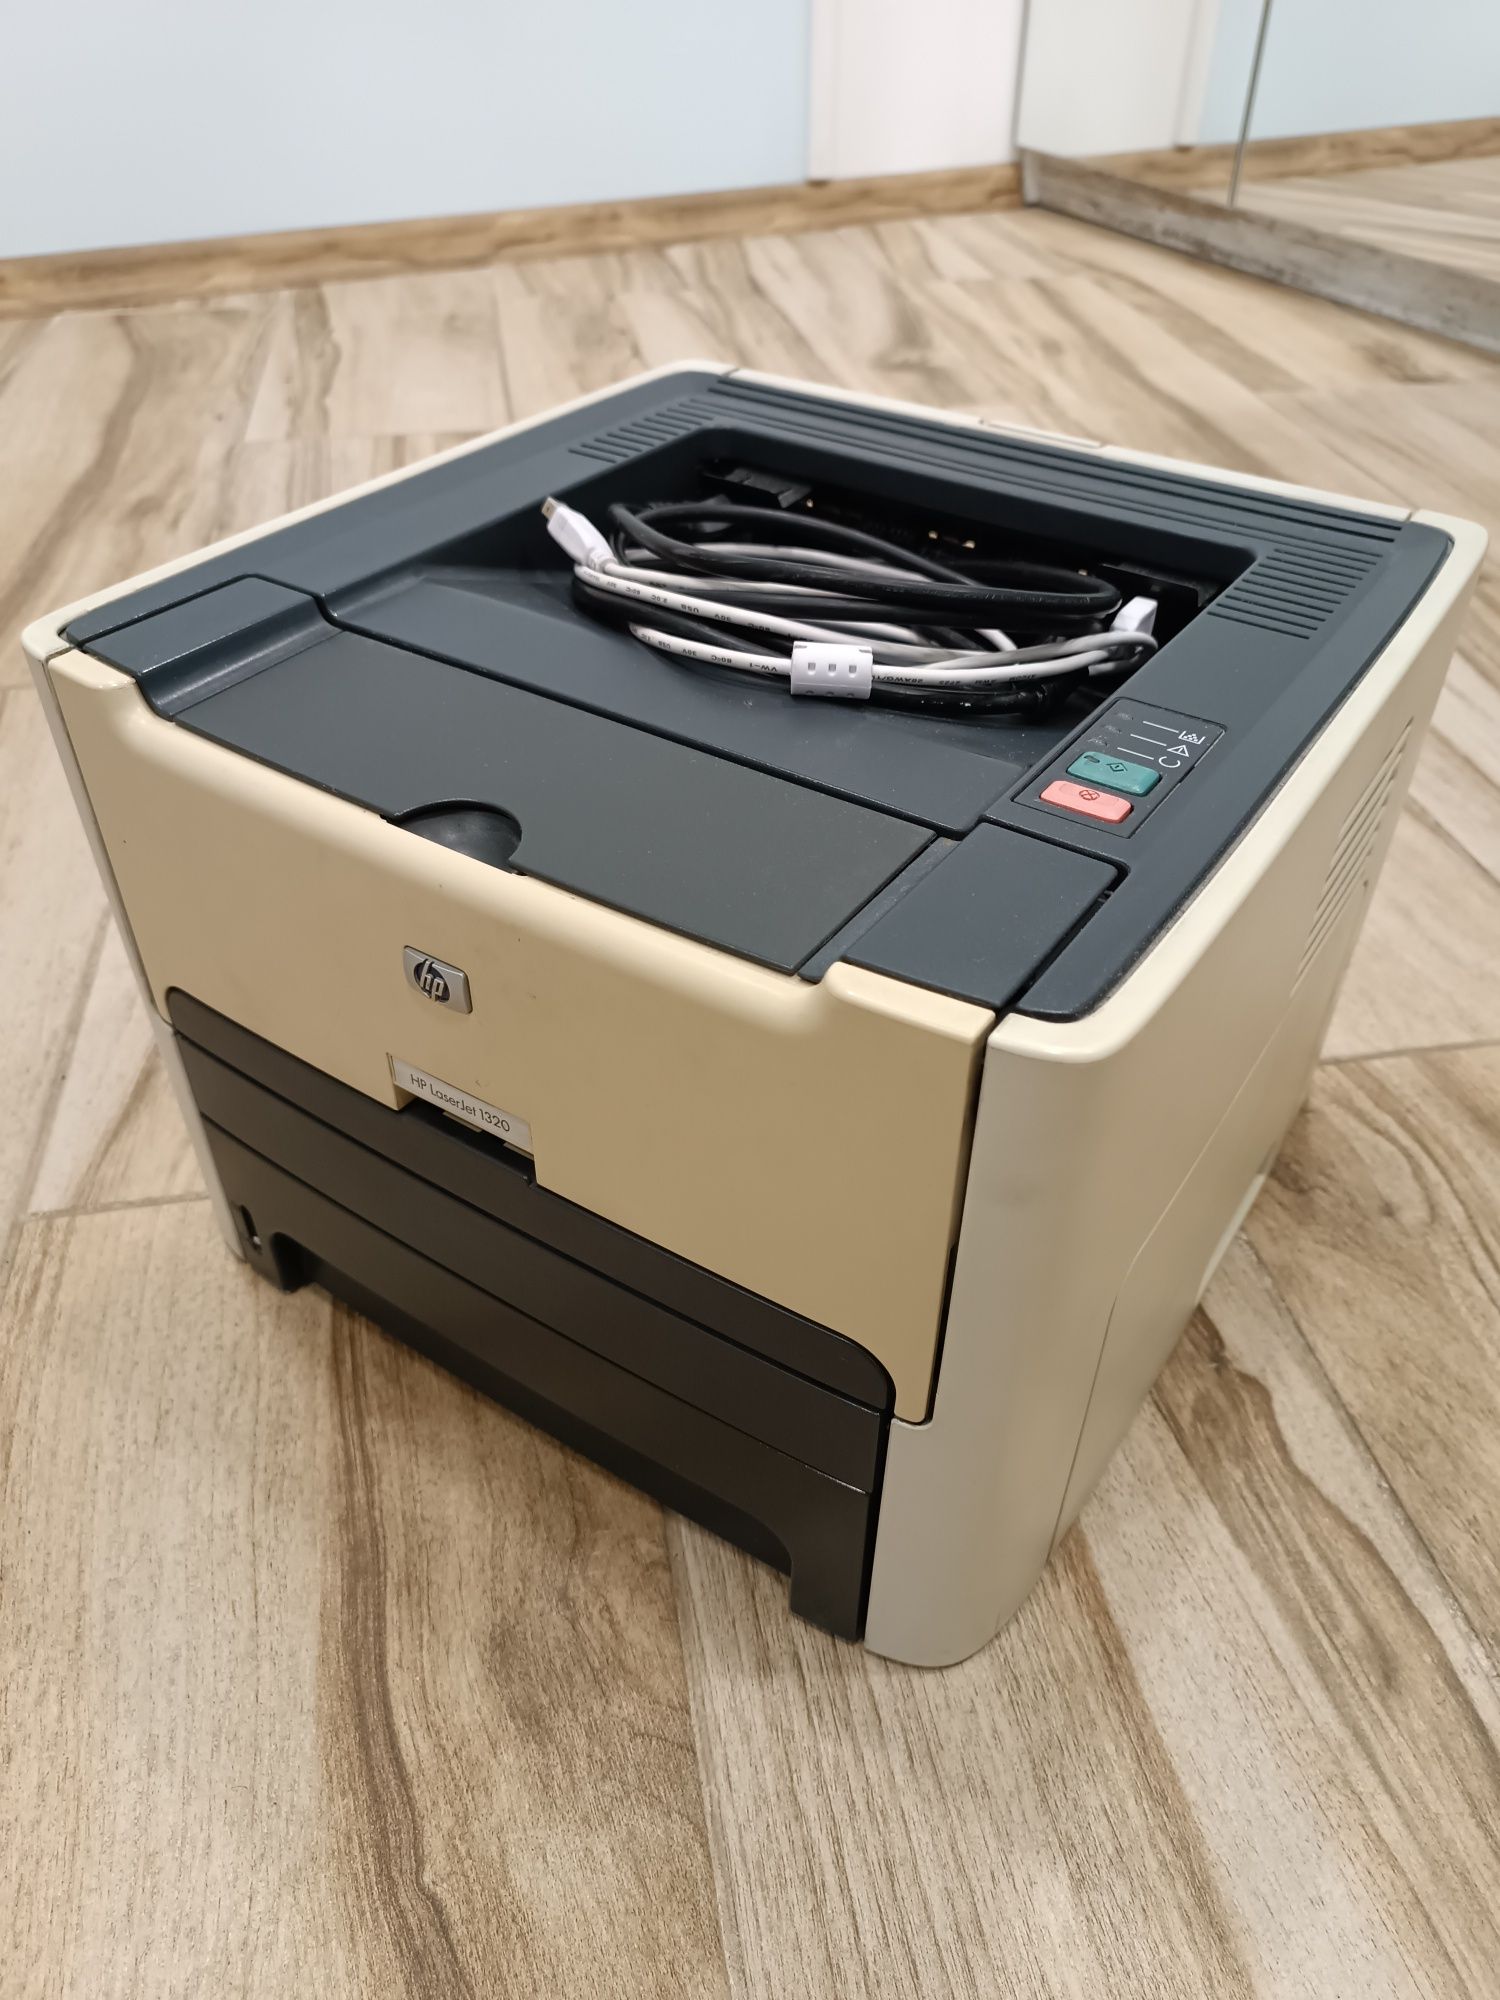 Принтер HP laserjet 1320 лазернтй